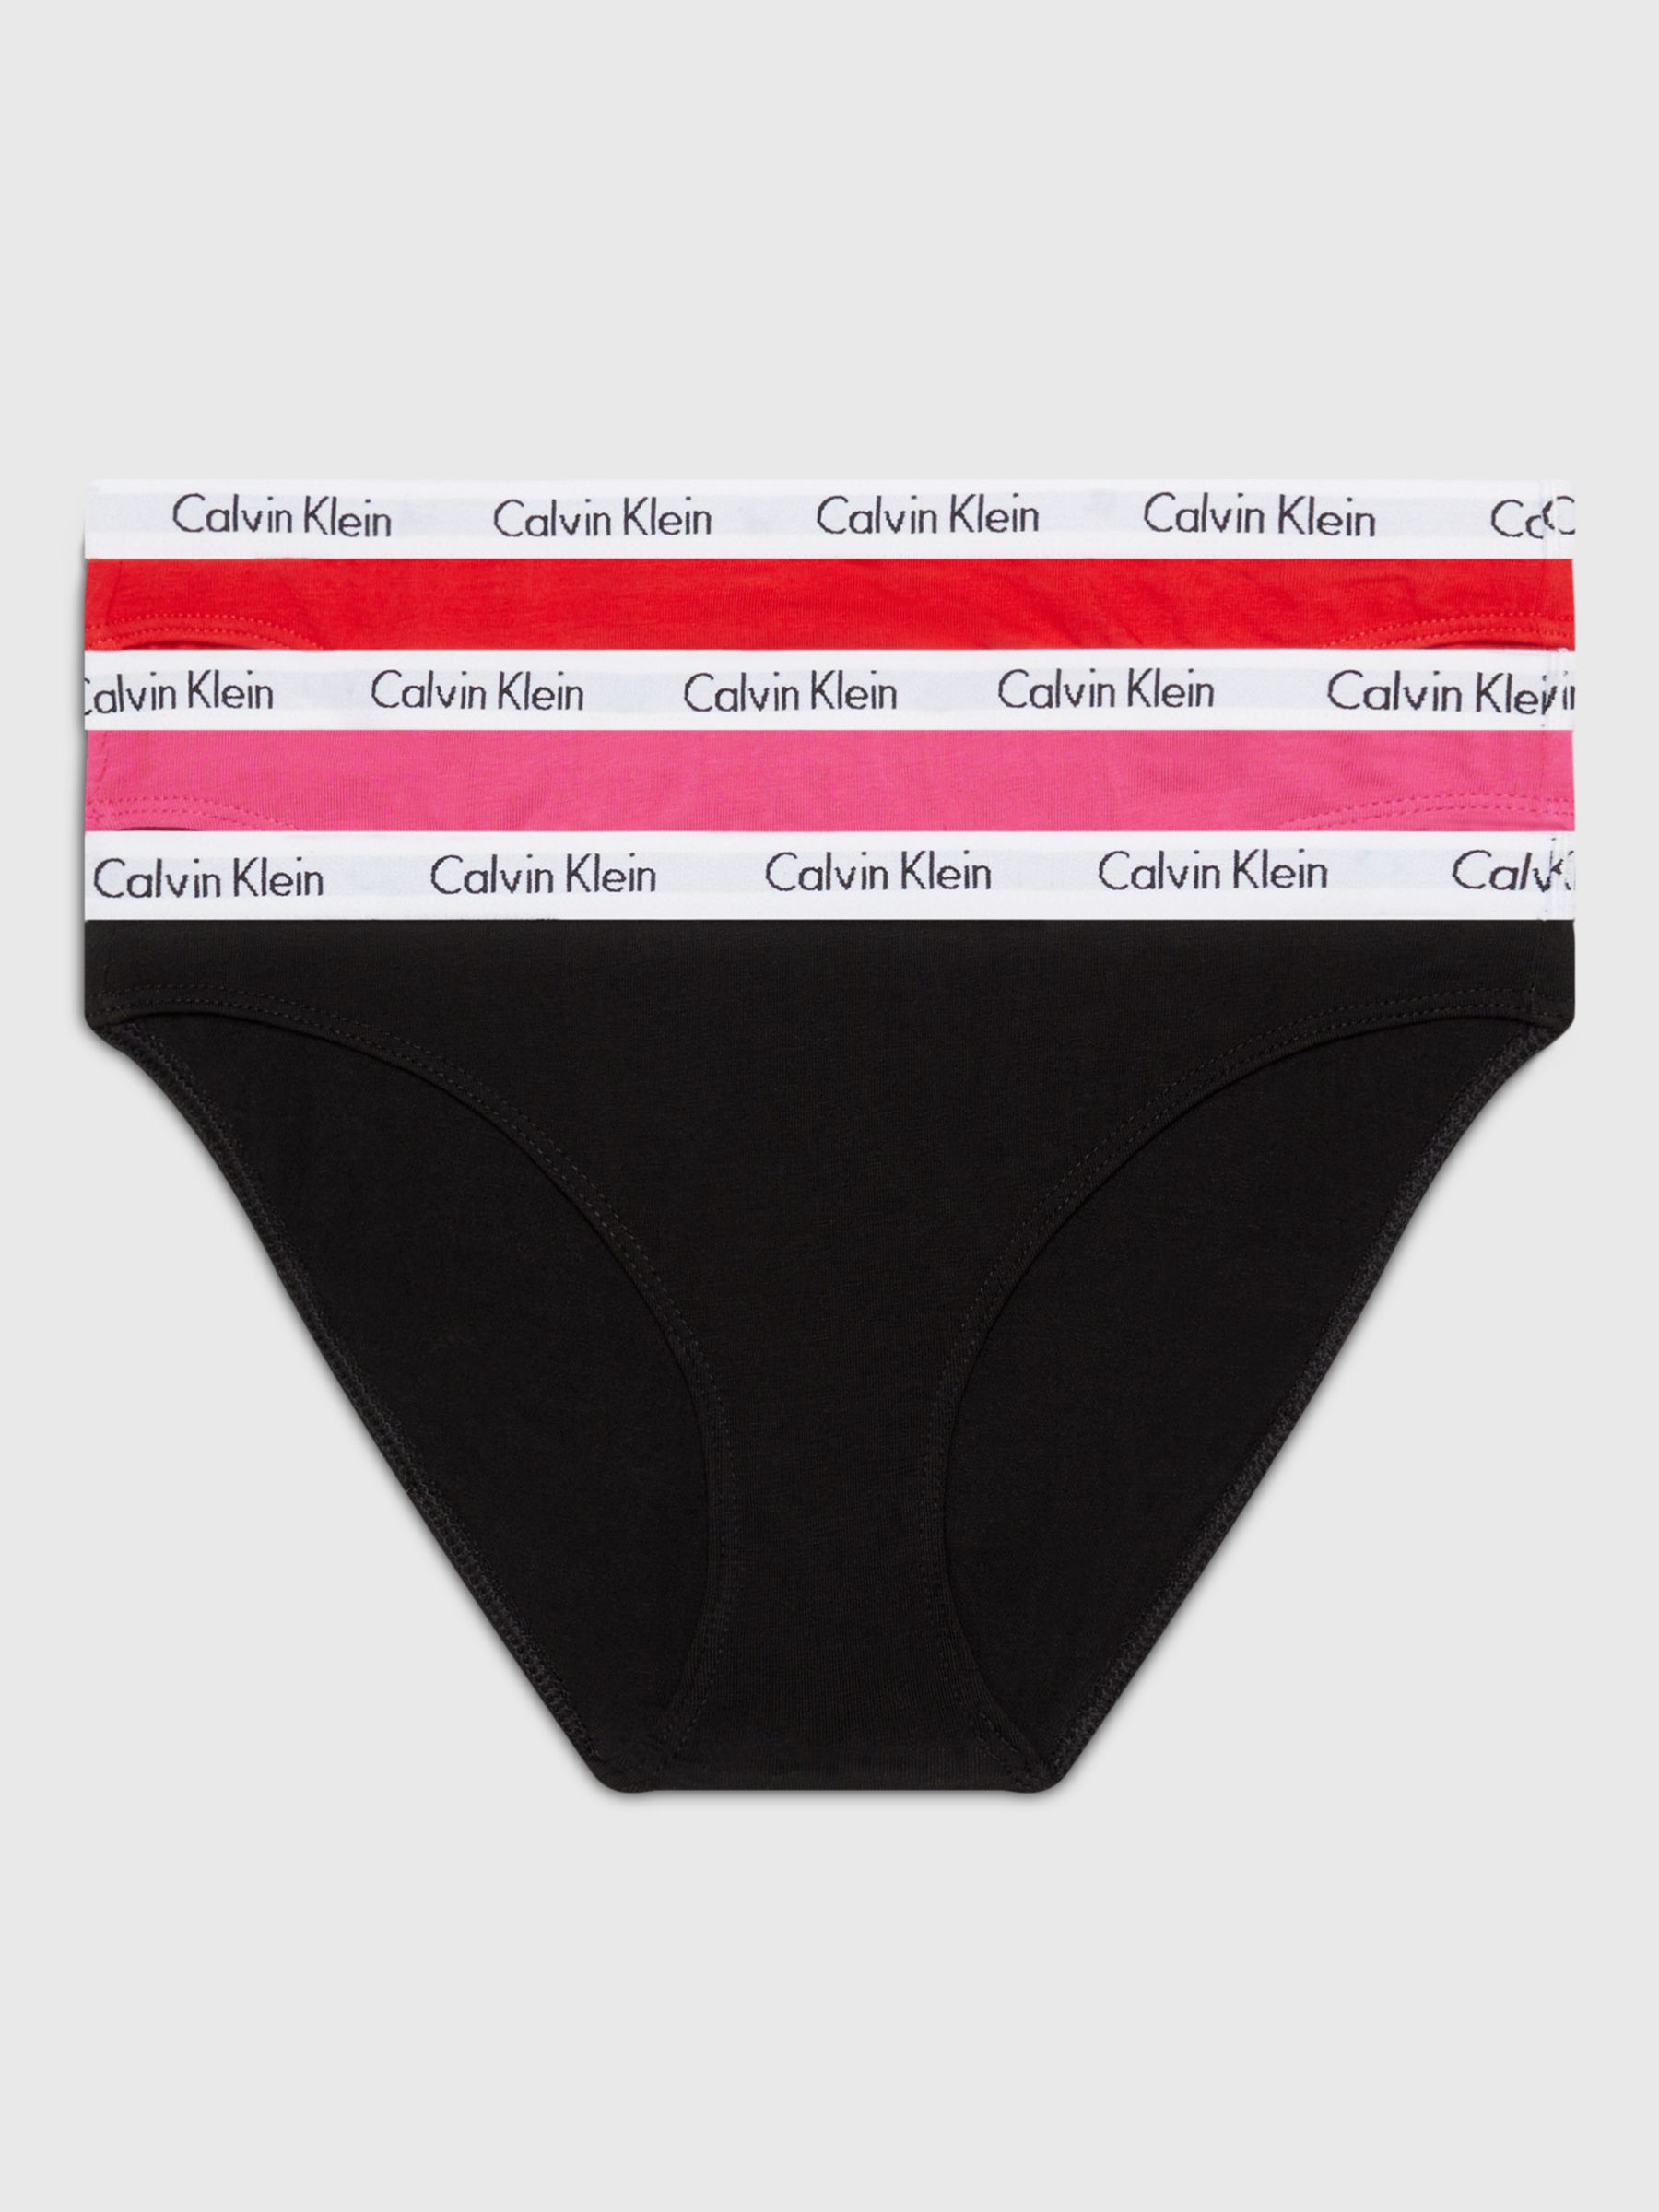 Calvin Klein Carousel Bikini Knickers, Pack of 3, Black/Rouge/Fuchsia ...